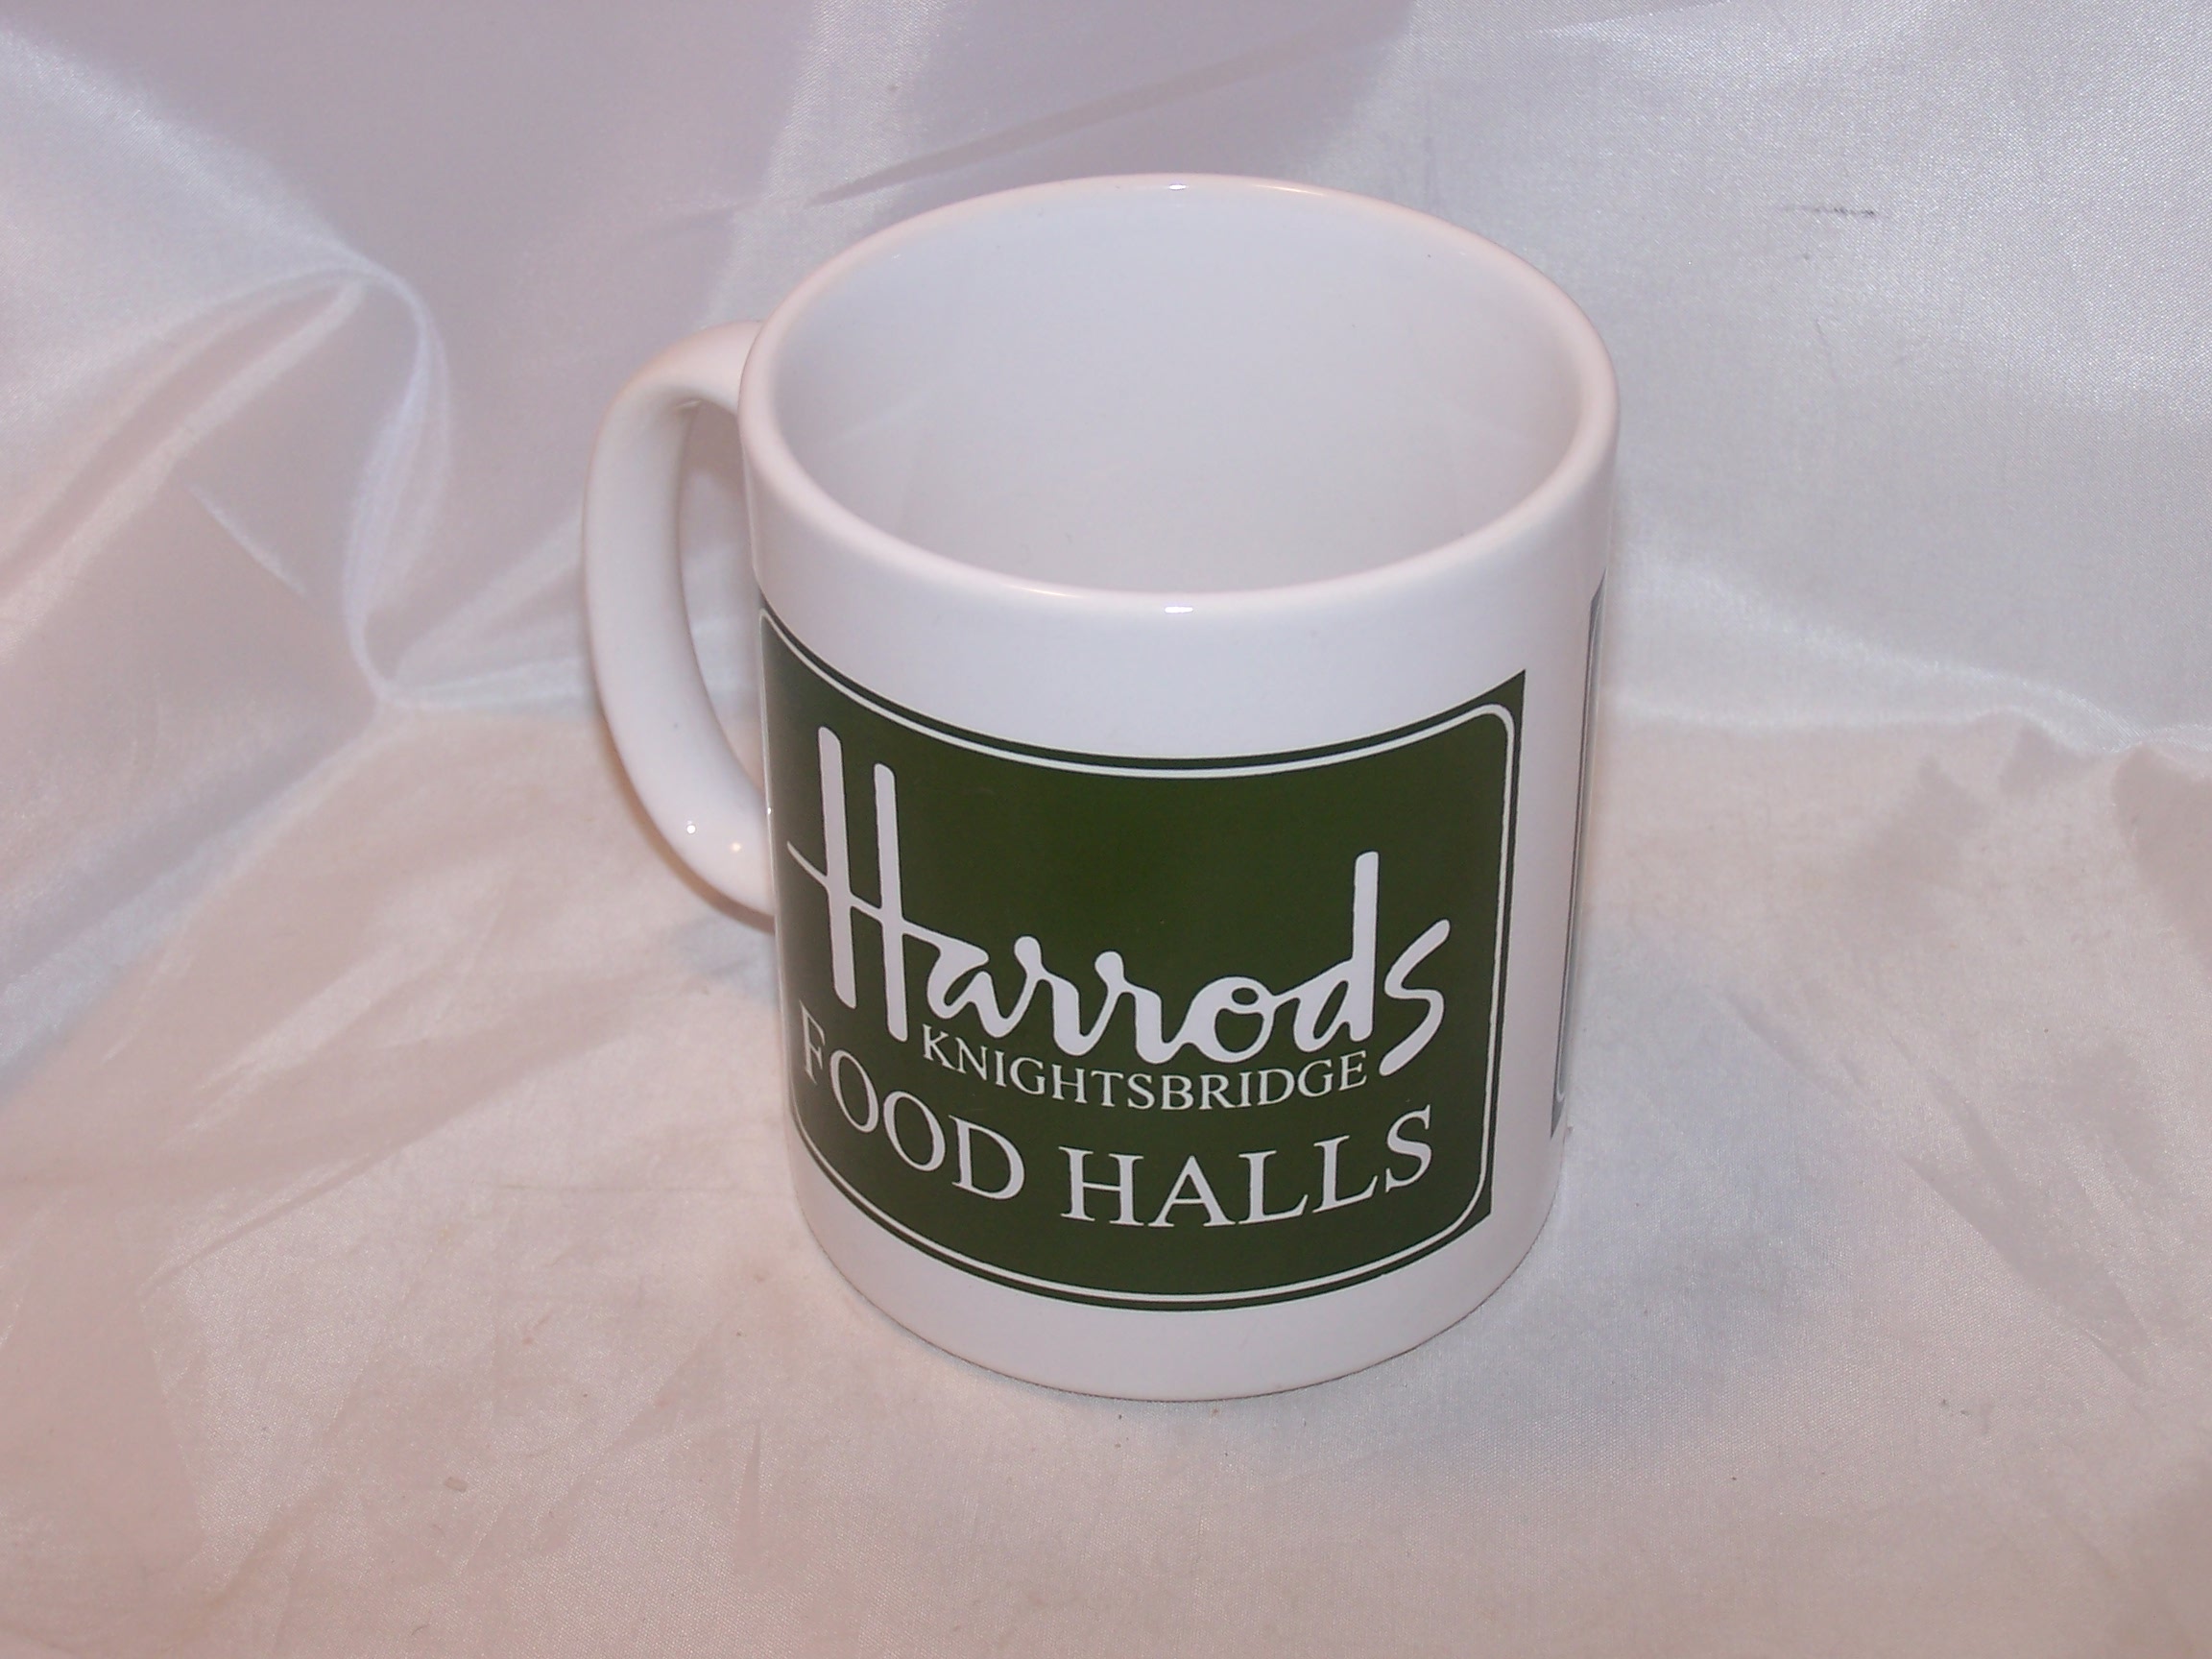 Image 2 of Harrods Food Hall Mug, Cup, Knightsbridge, Green, White